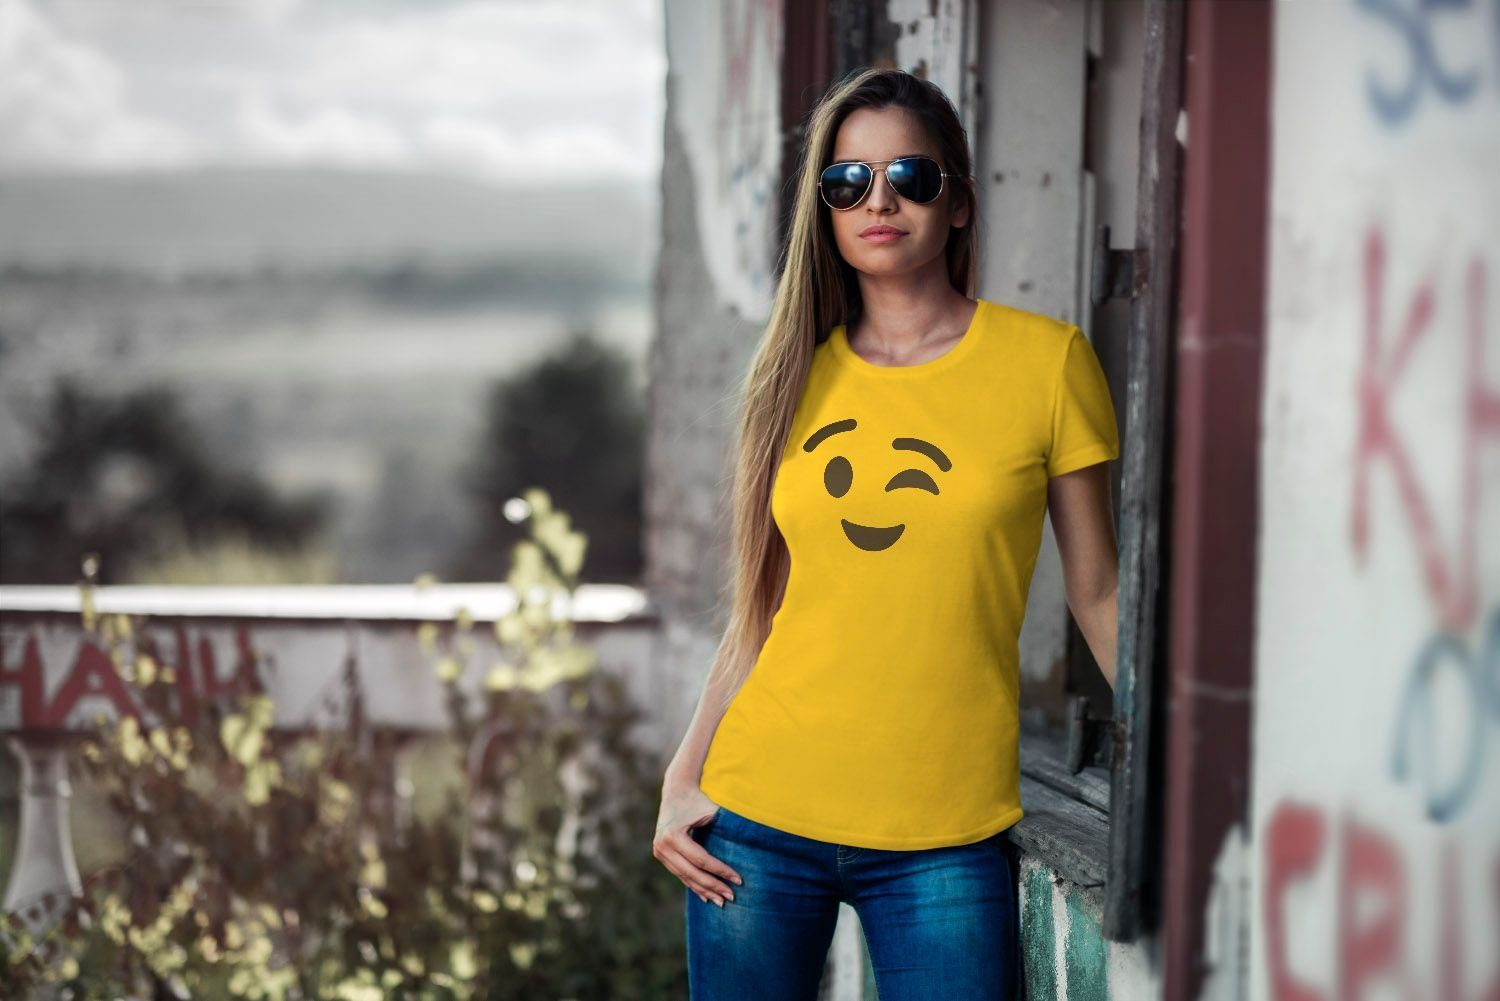 MoonWorks Print-Shirt Damen T-Shirt Gruppenkostüm JGA Emoticon Zwinkern Moonworks® Fun-Shirt gelb Junggesellenabschied Karneval mit lustig Fasching Print